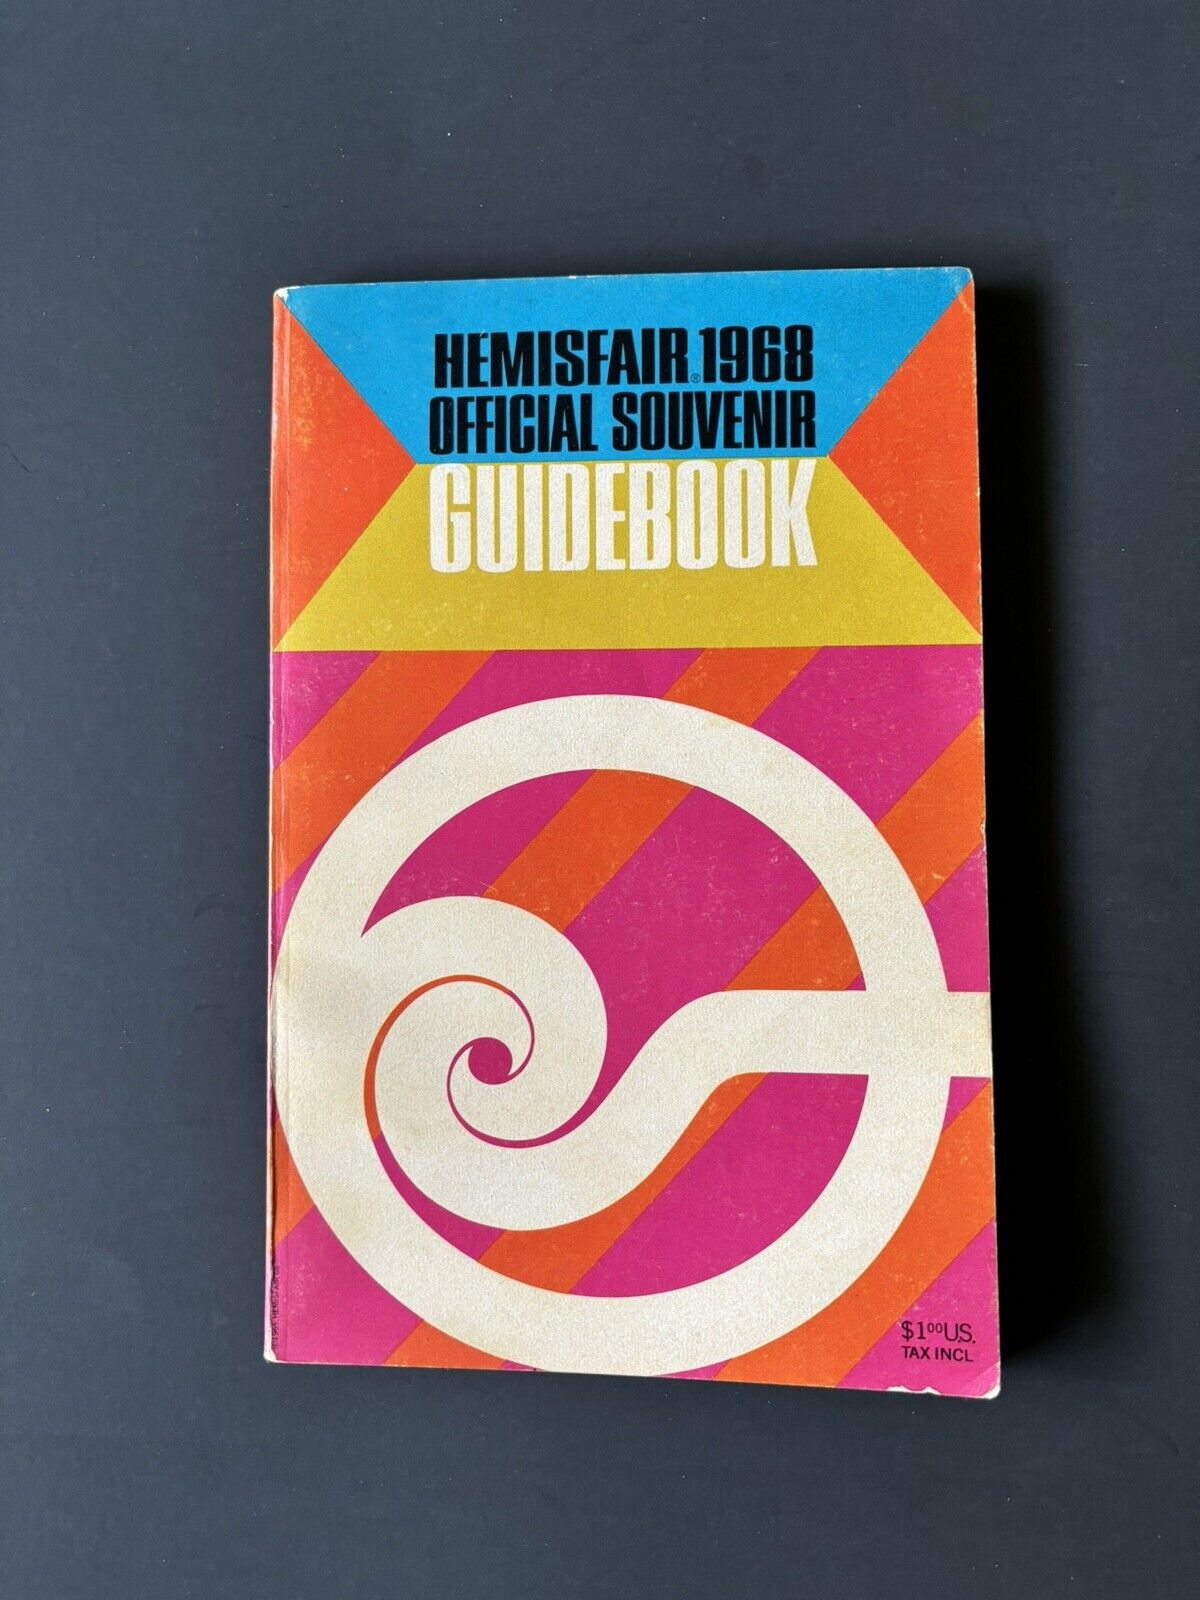 Hemisfair 1968 Official Souvenir Guidebook (Softcover, 1968)